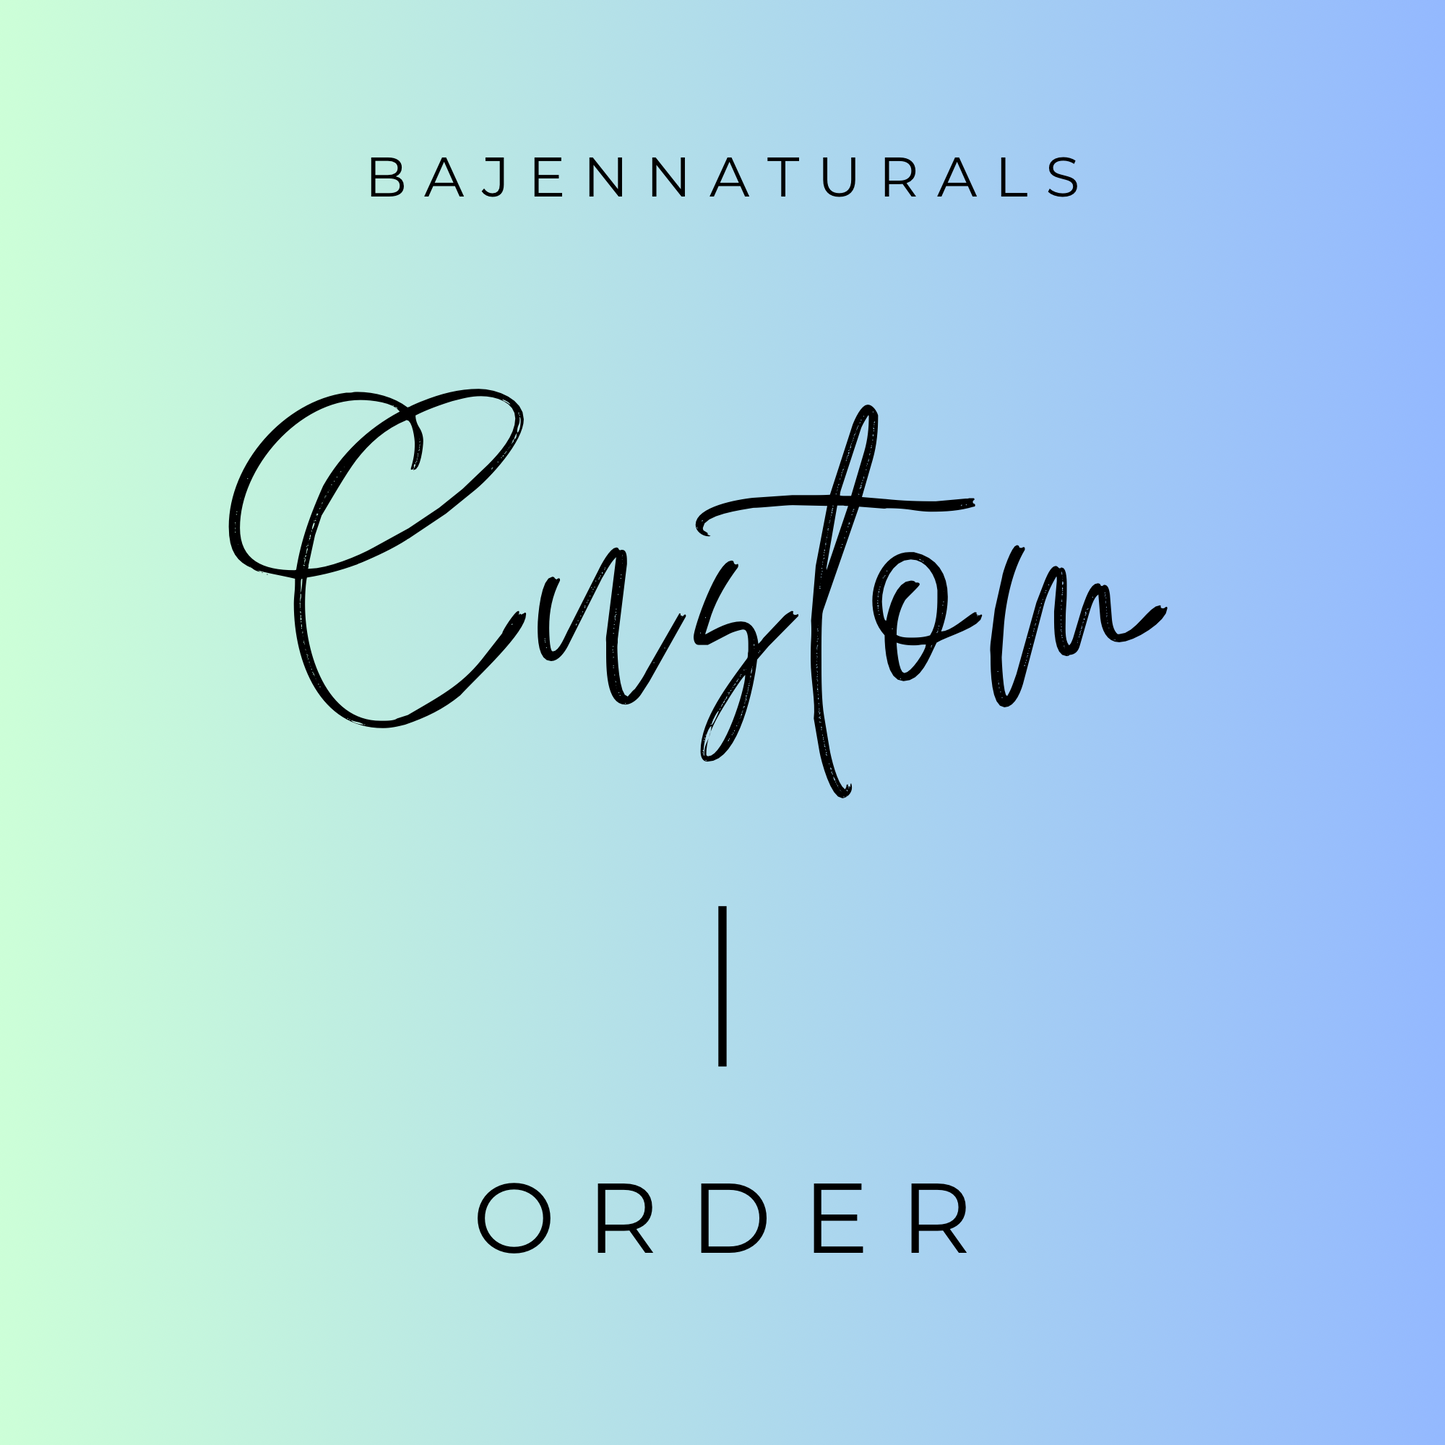 Custom soap order